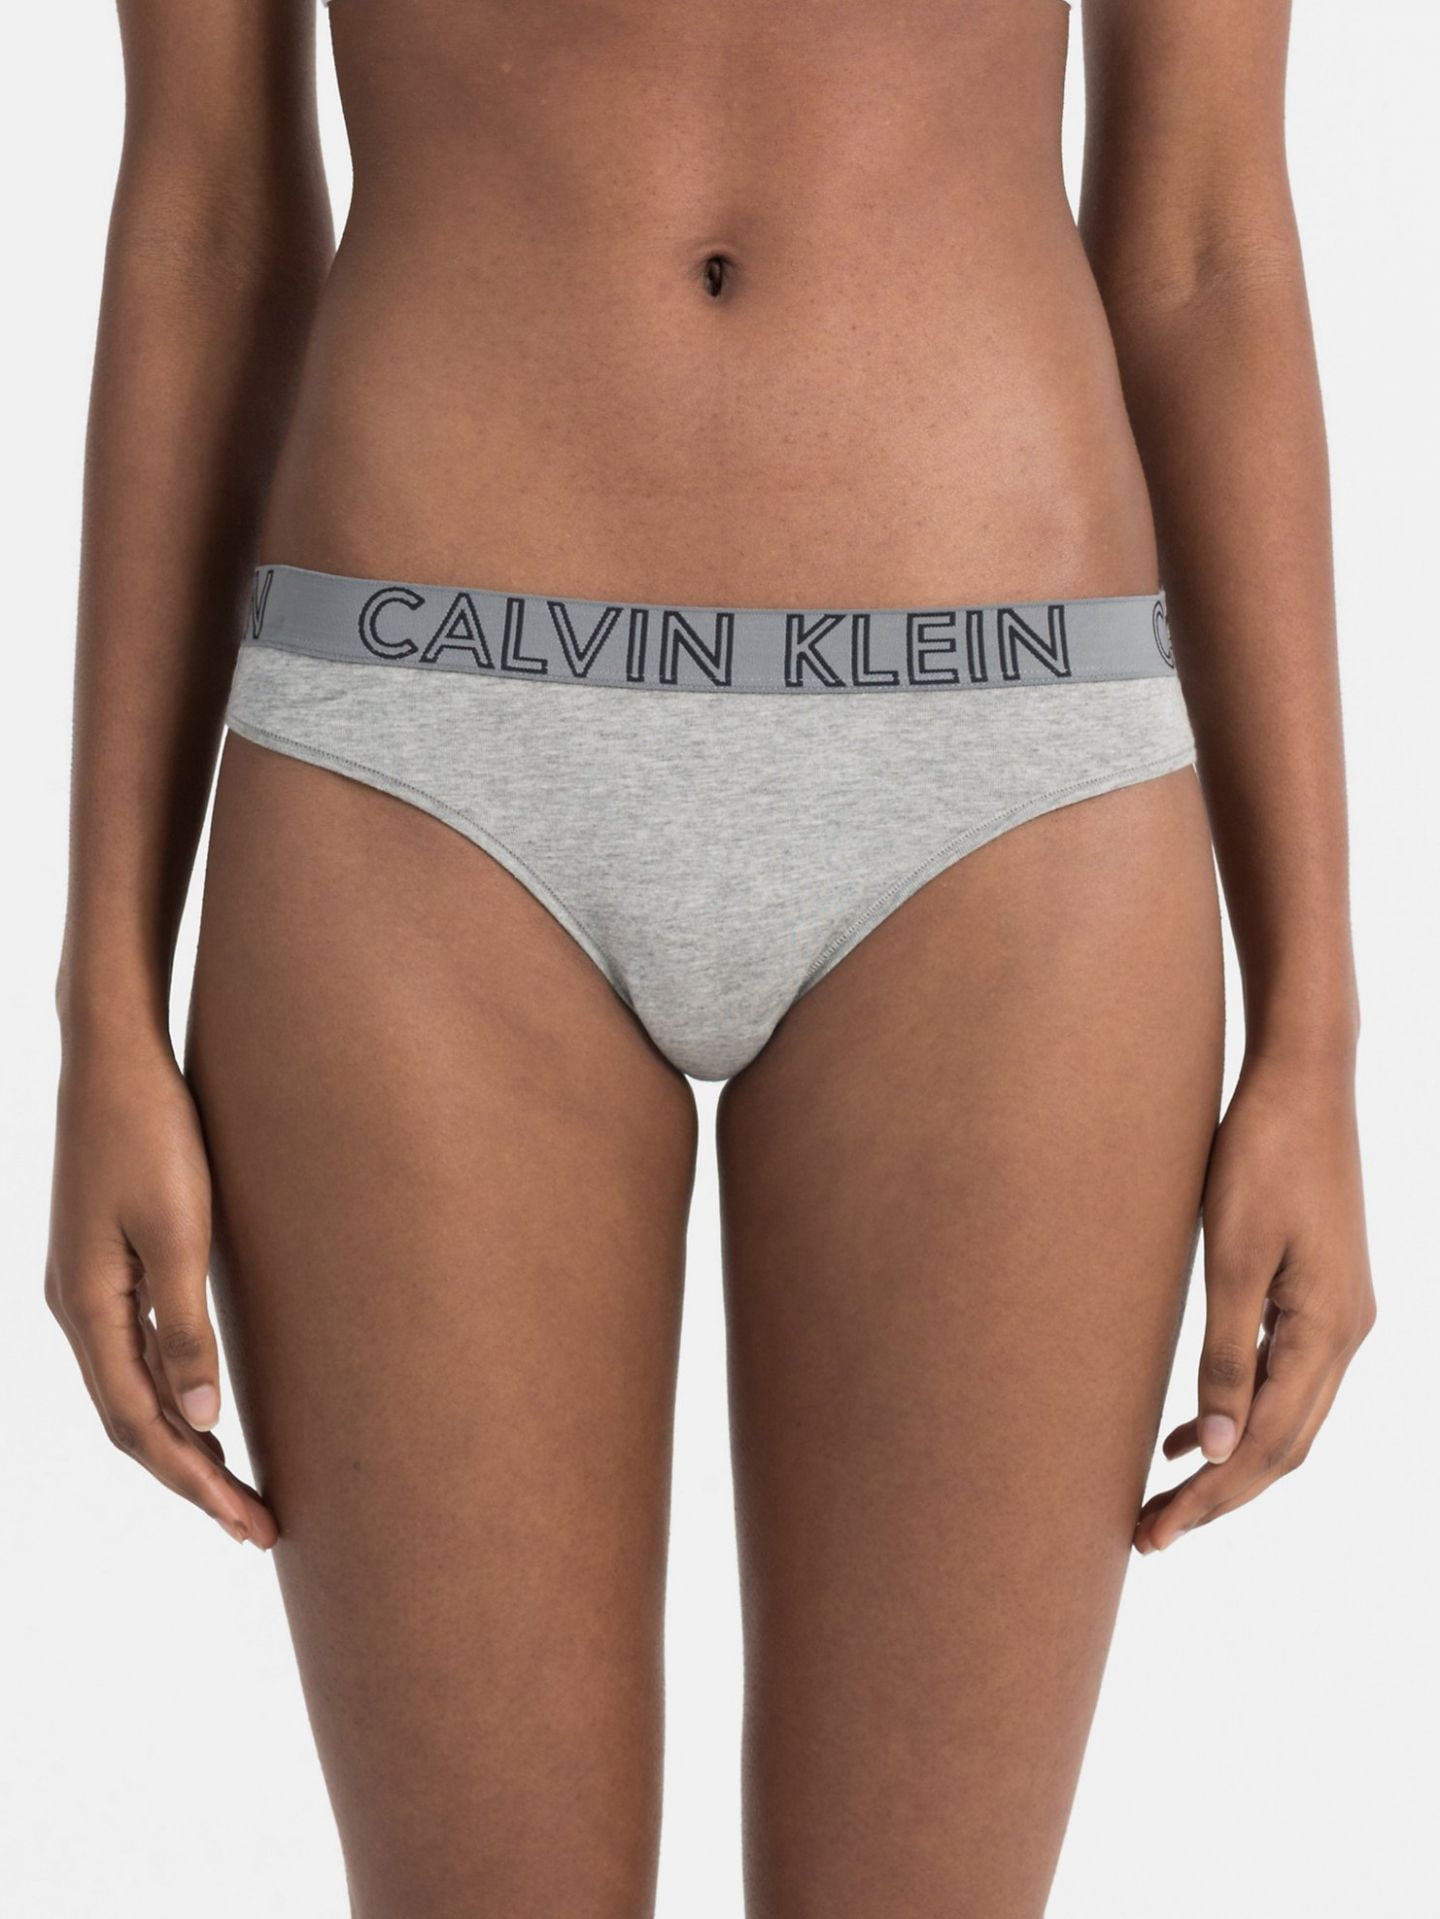 Calvin Klein Women\'s Ultimate Cotton Thong, Grey Heather, Medium